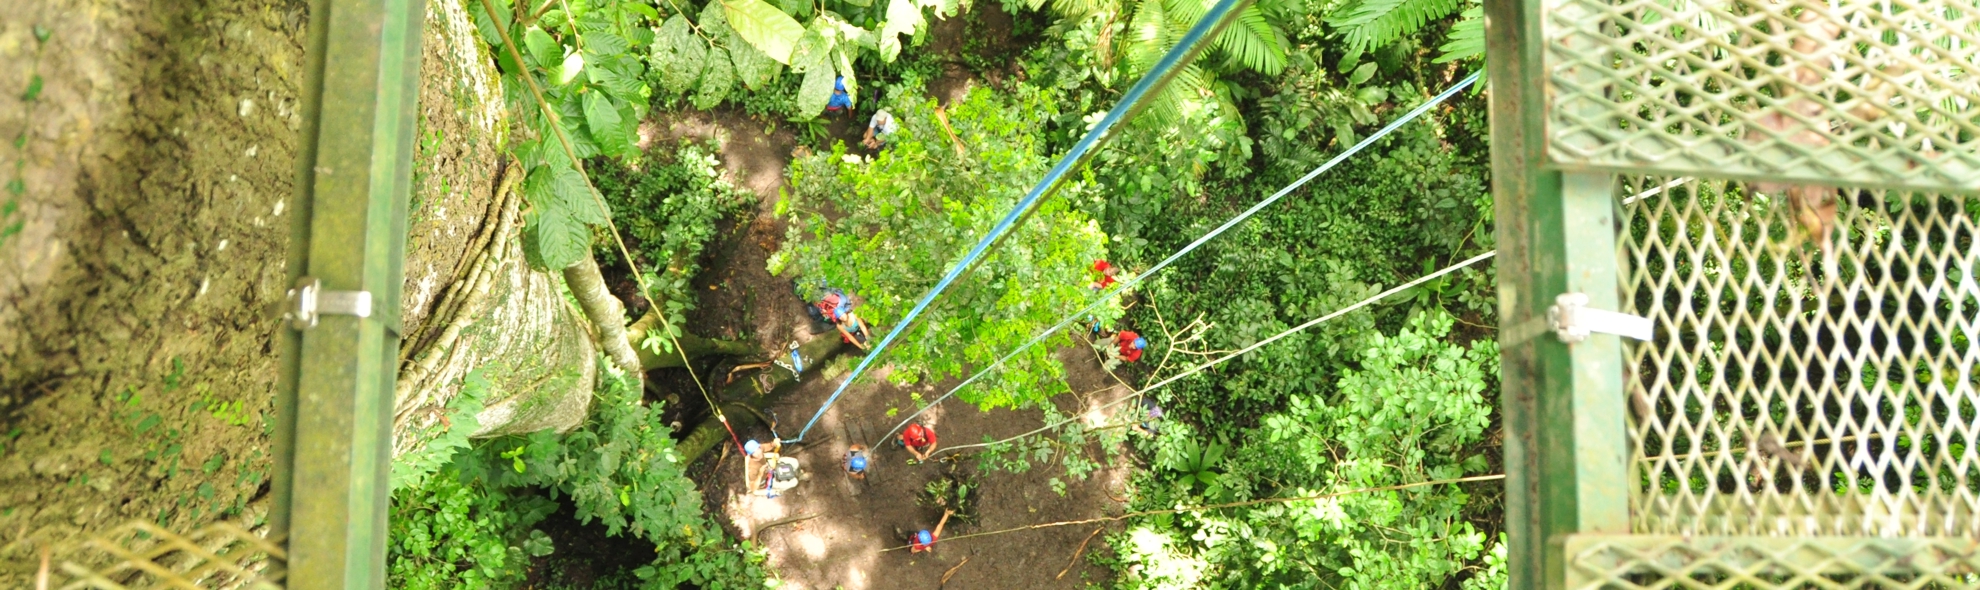 Serendipity Costa Rica Platform in Rain Forest ascending to platform
       